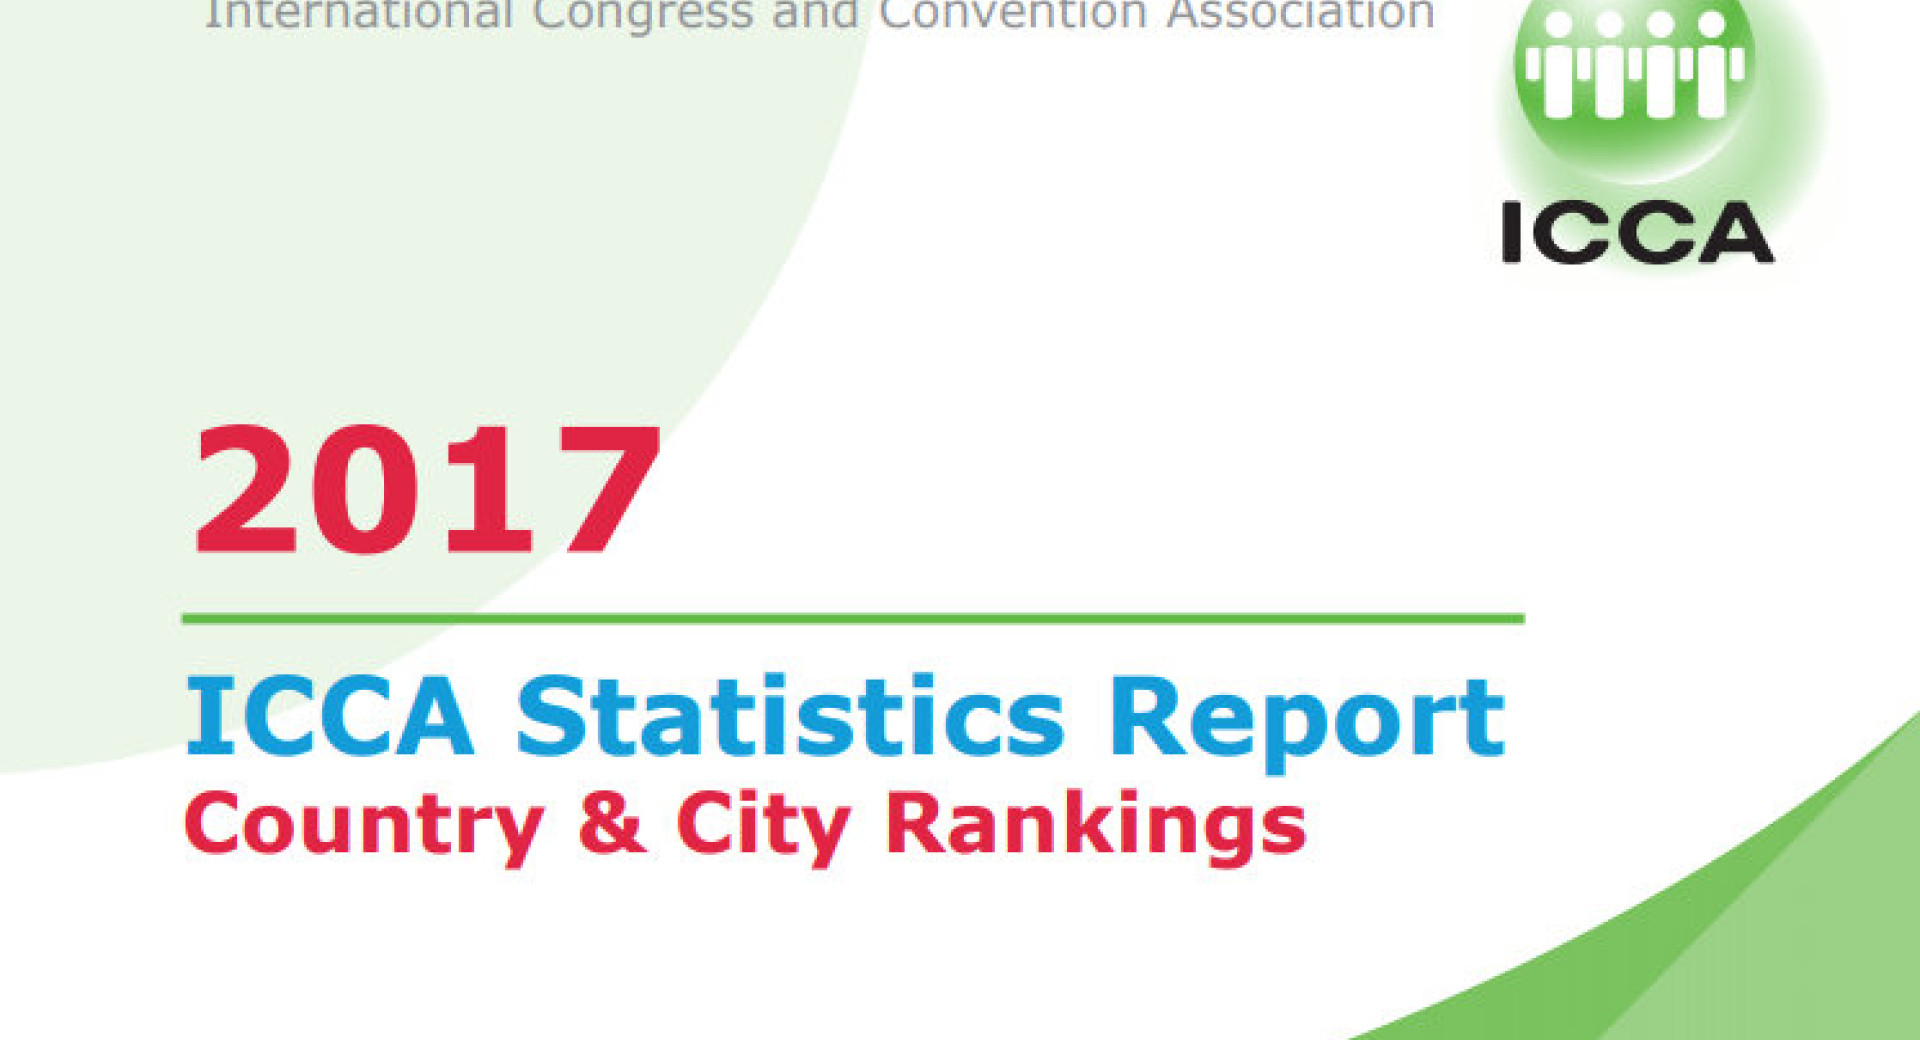 Naslovnica poročila ICCA Statistics Report 2017.